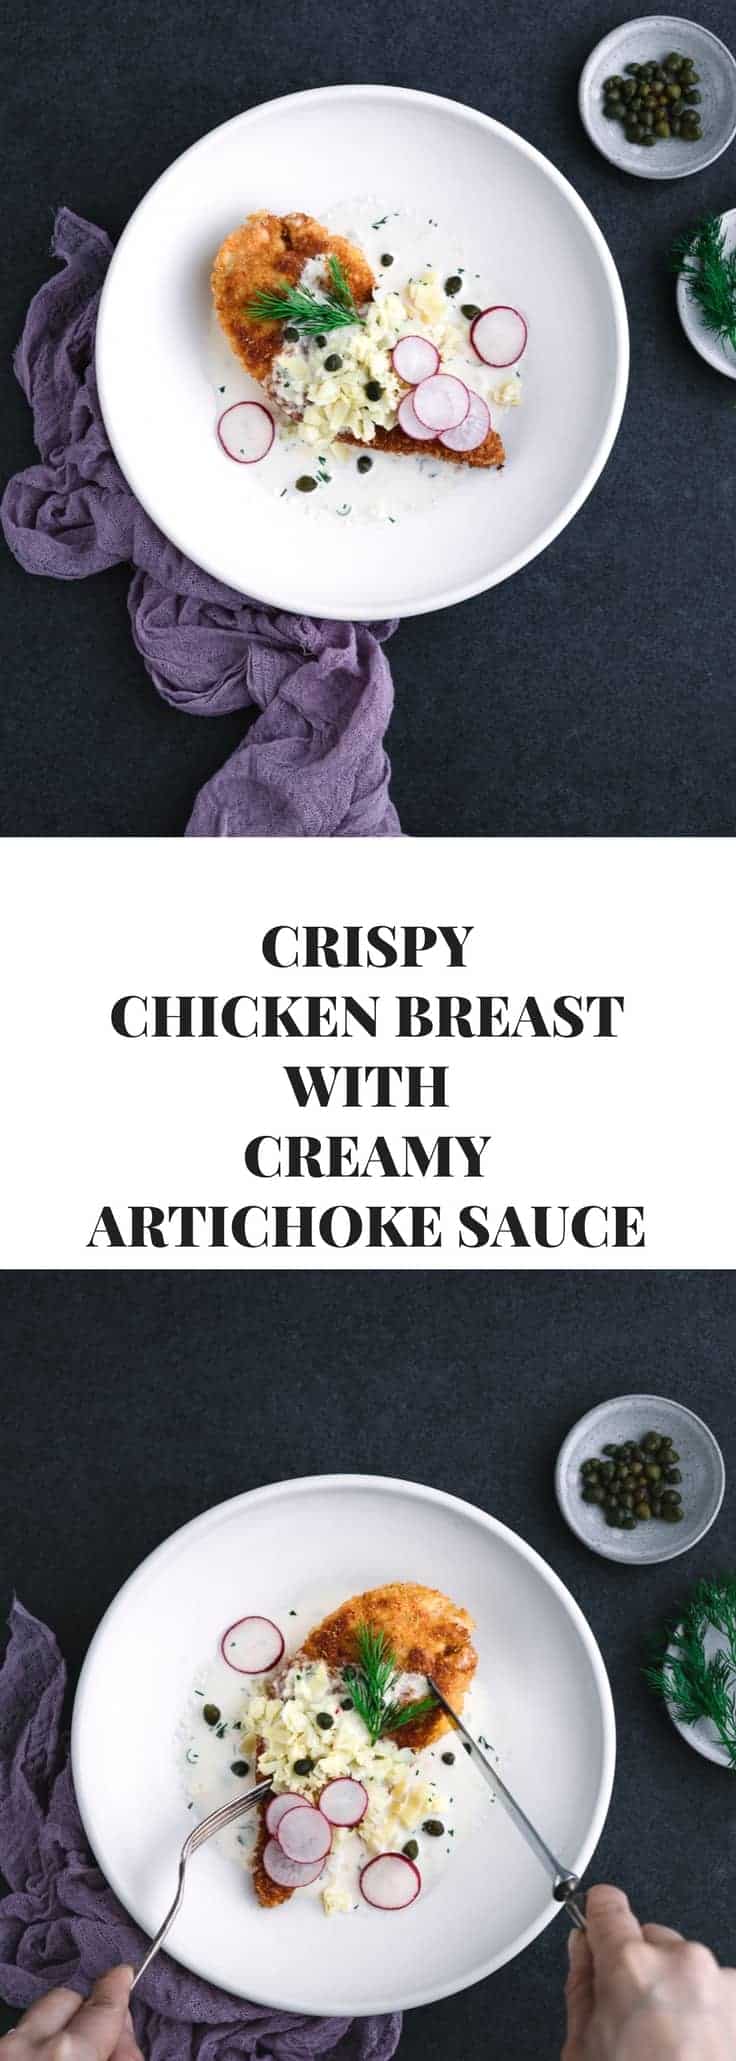 Crispy Chicken Breast with Creamy Artichoke Sauce